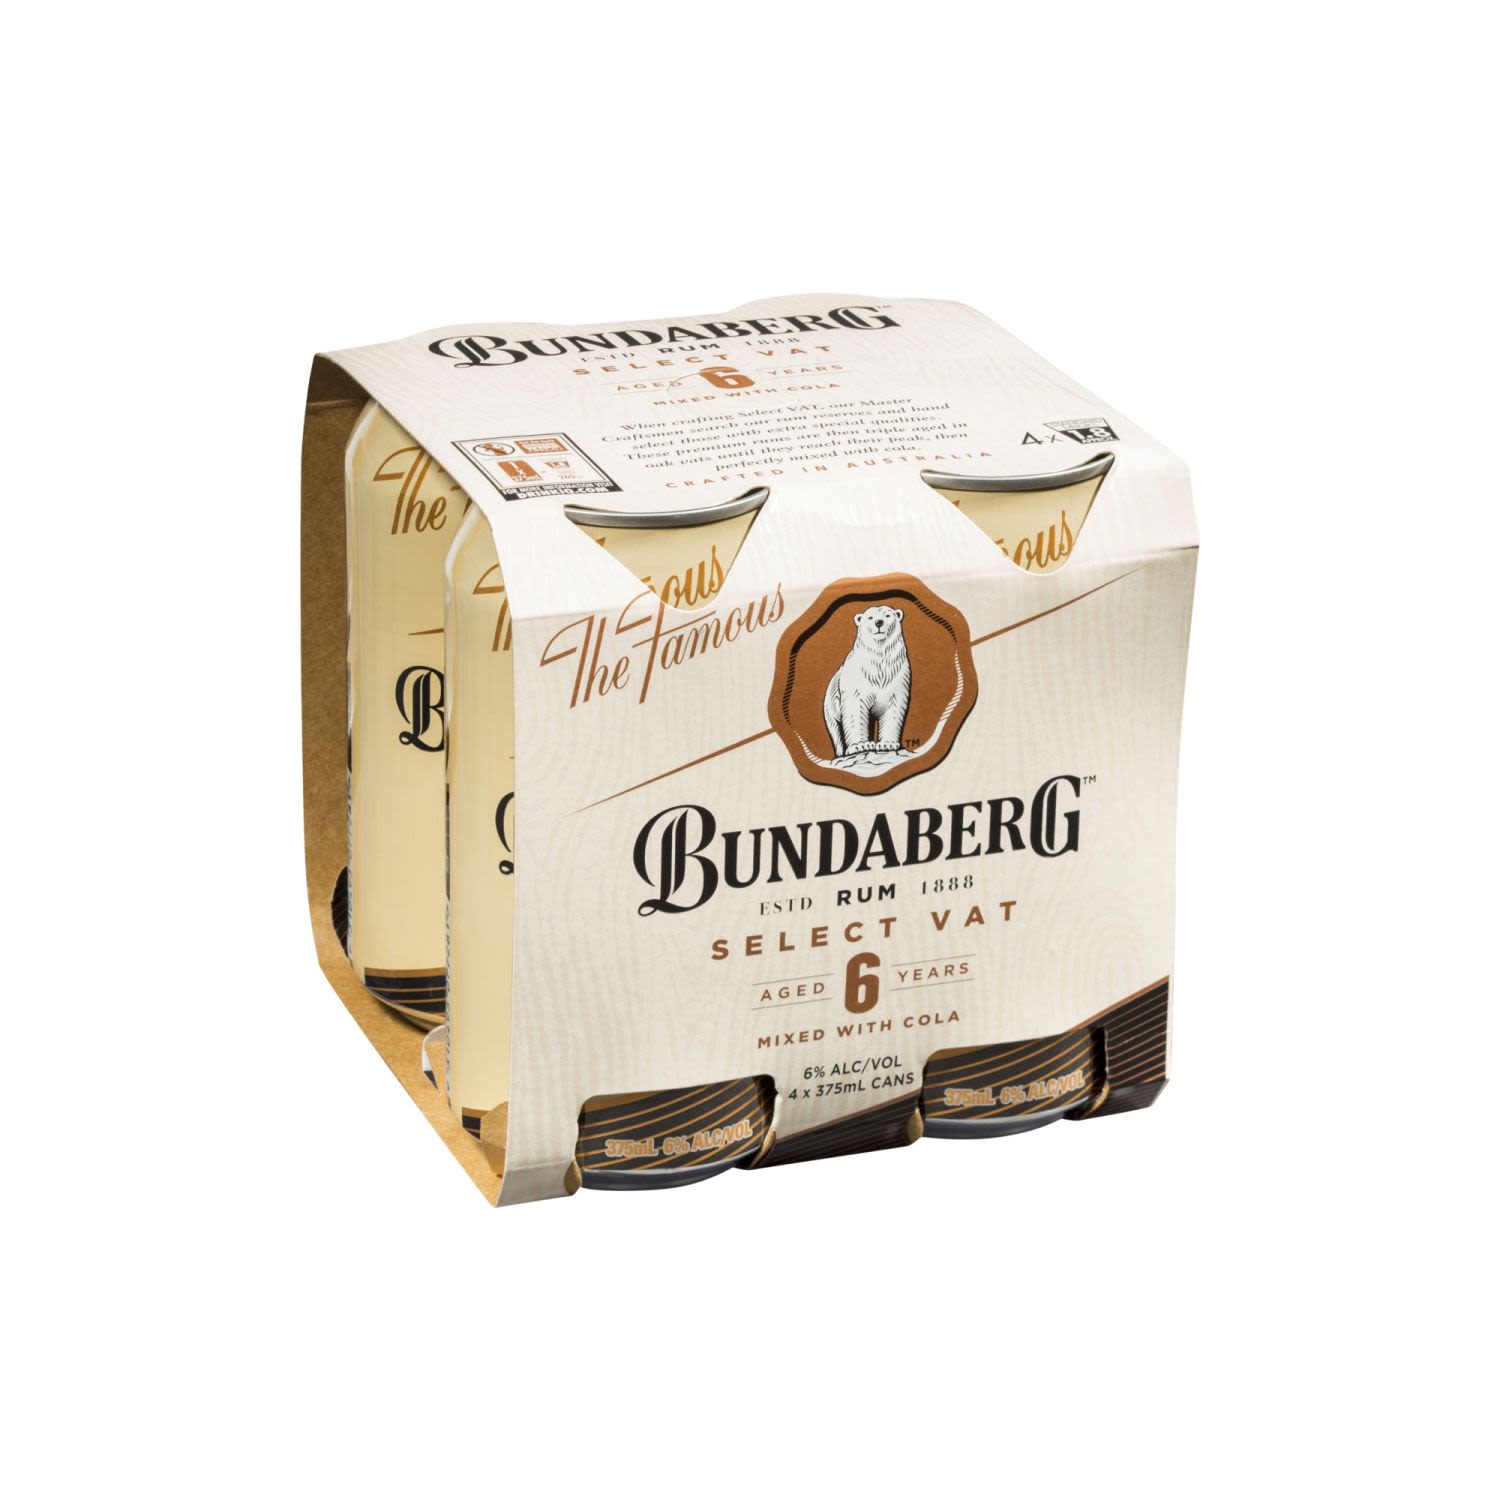 Bundaberg Select Vat 6 Year Old Rum & Cola Can 375mL 4 Pack